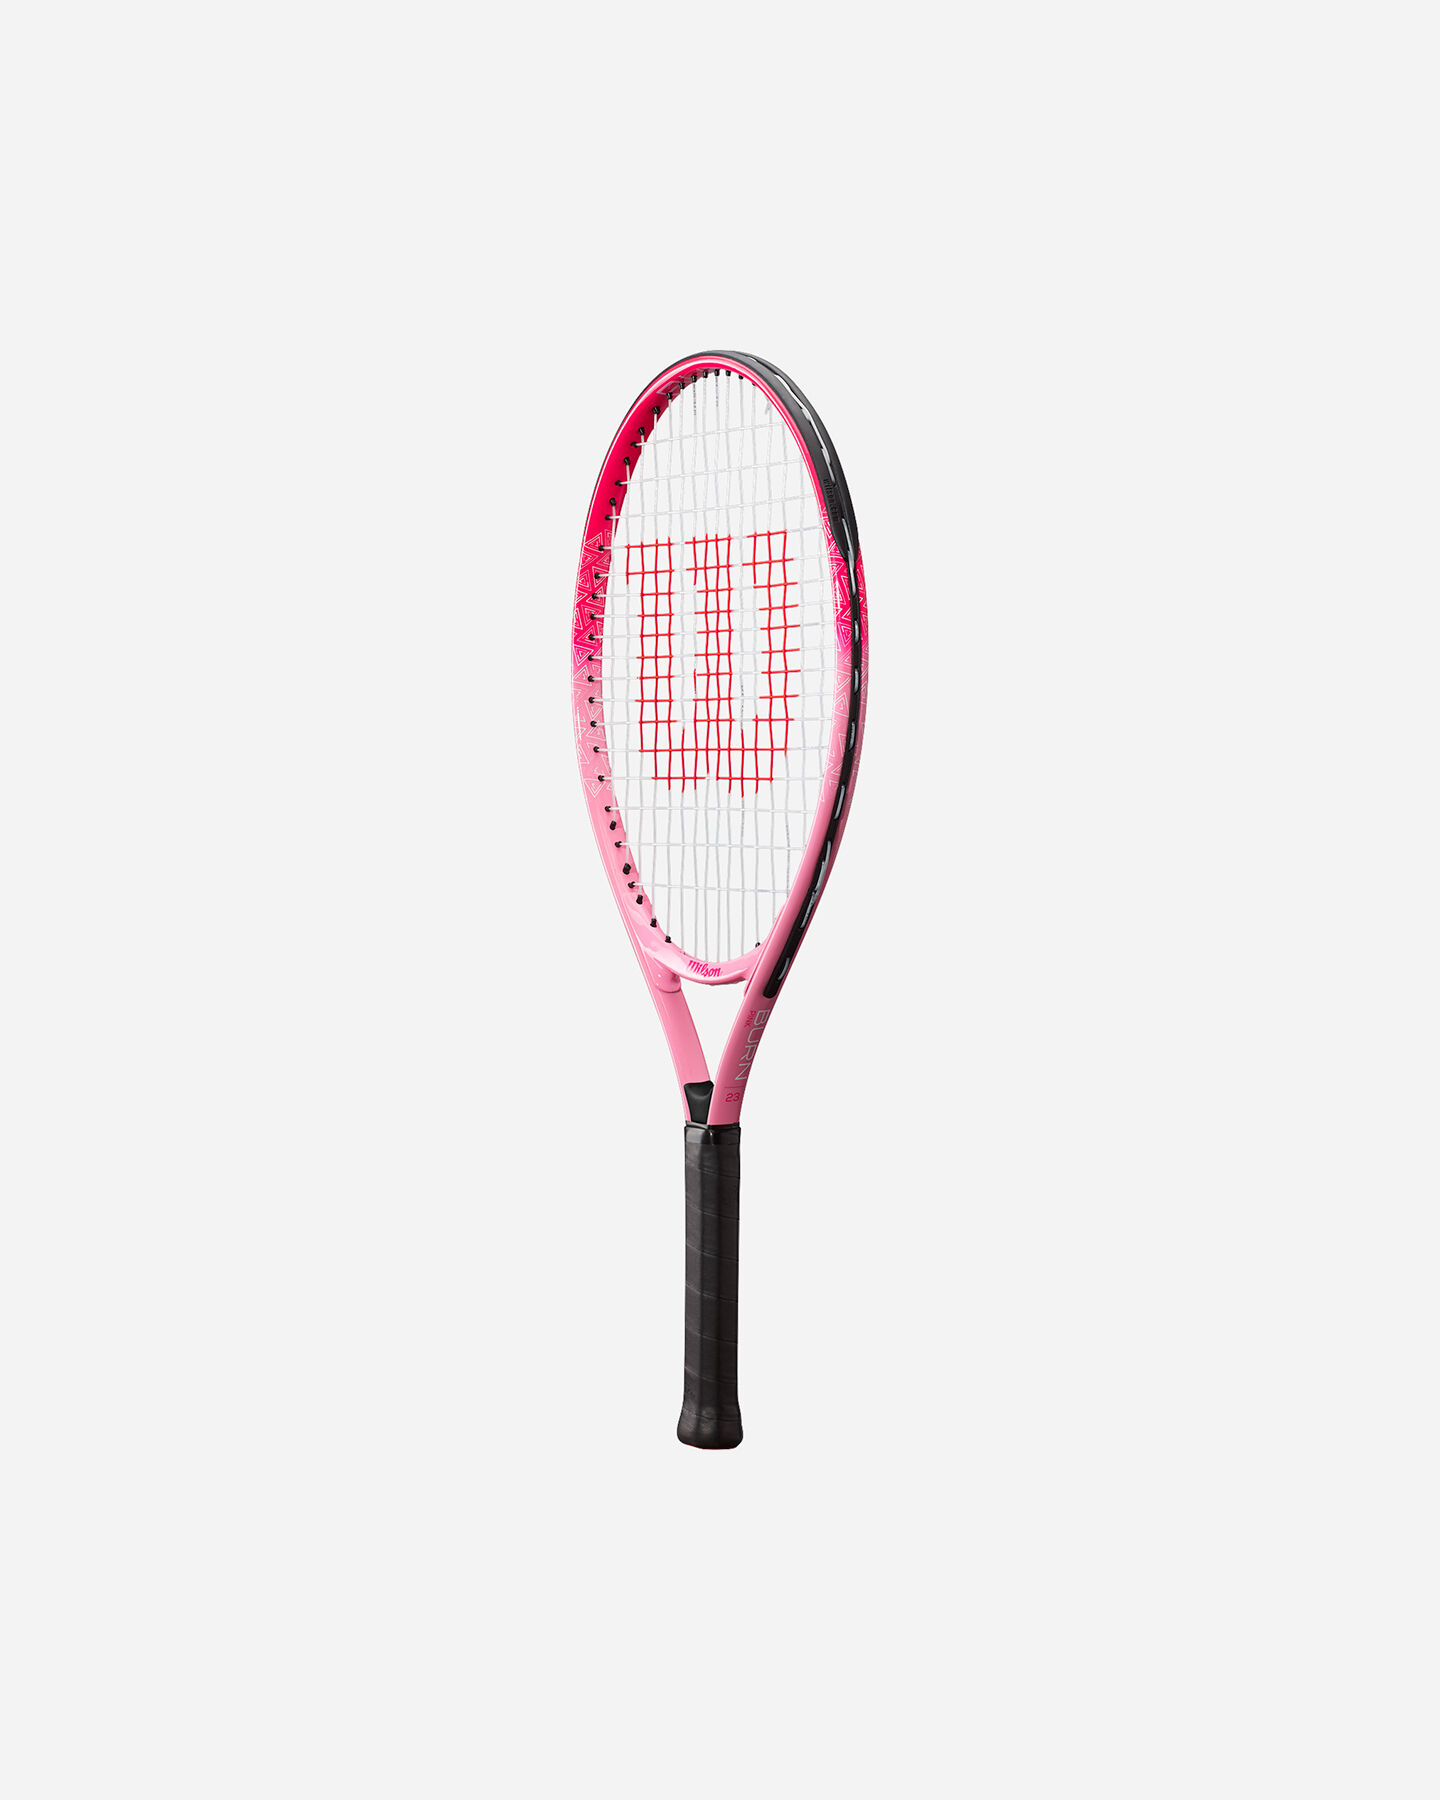  Racchetta tennis WILSON BURN PINK 23 JR S5344157|UNI|23 scatto 2